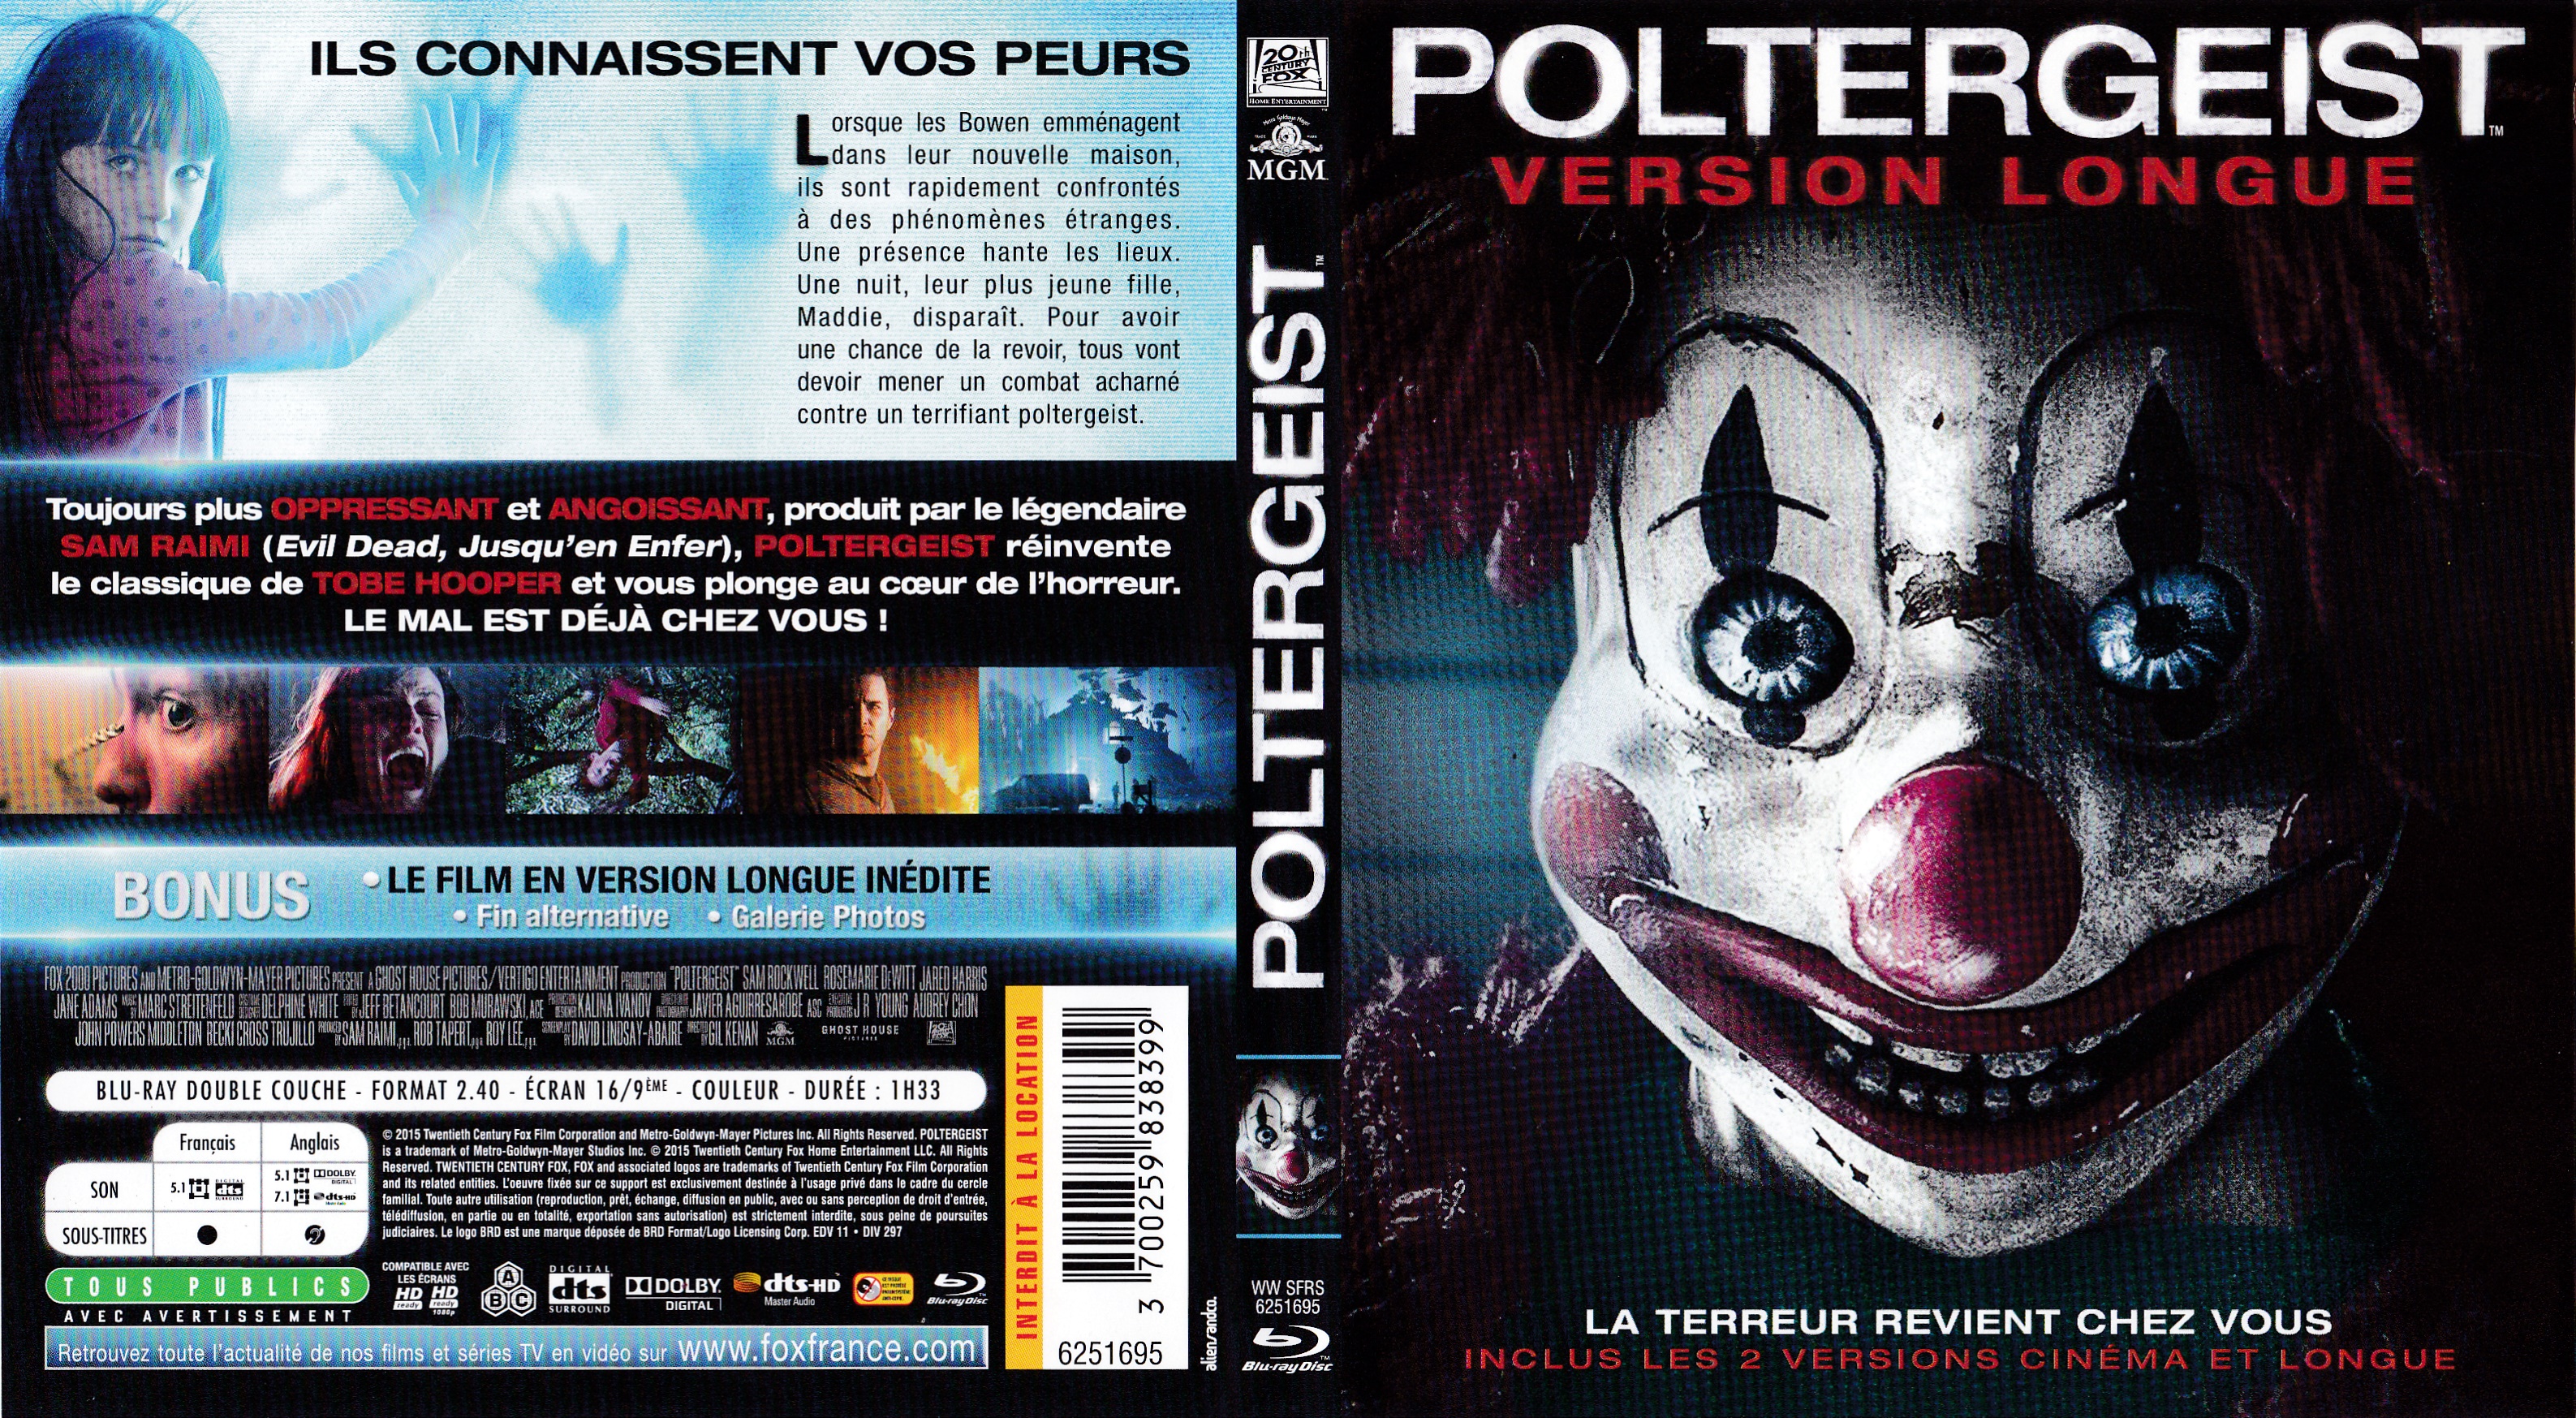 Jaquette DVD Poltergeist 2015 (BLU-RAY)